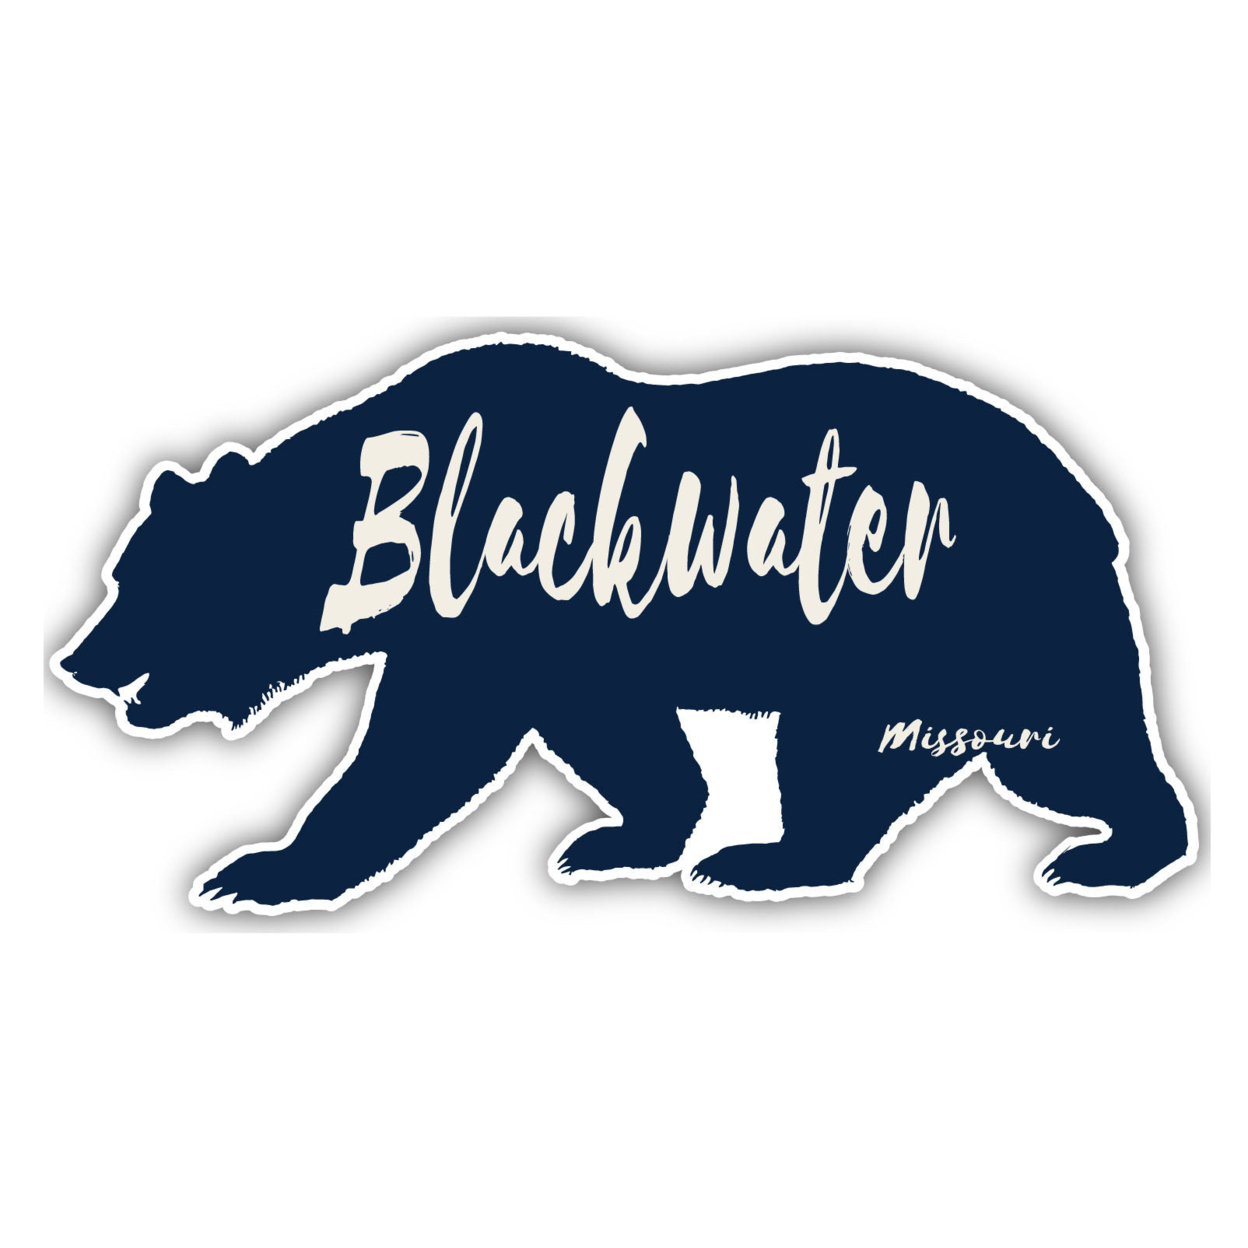 Blackwater Missouri Souvenir Decorative Stickers (Choose Theme And Size) - Single Unit, 6-Inch, Bear